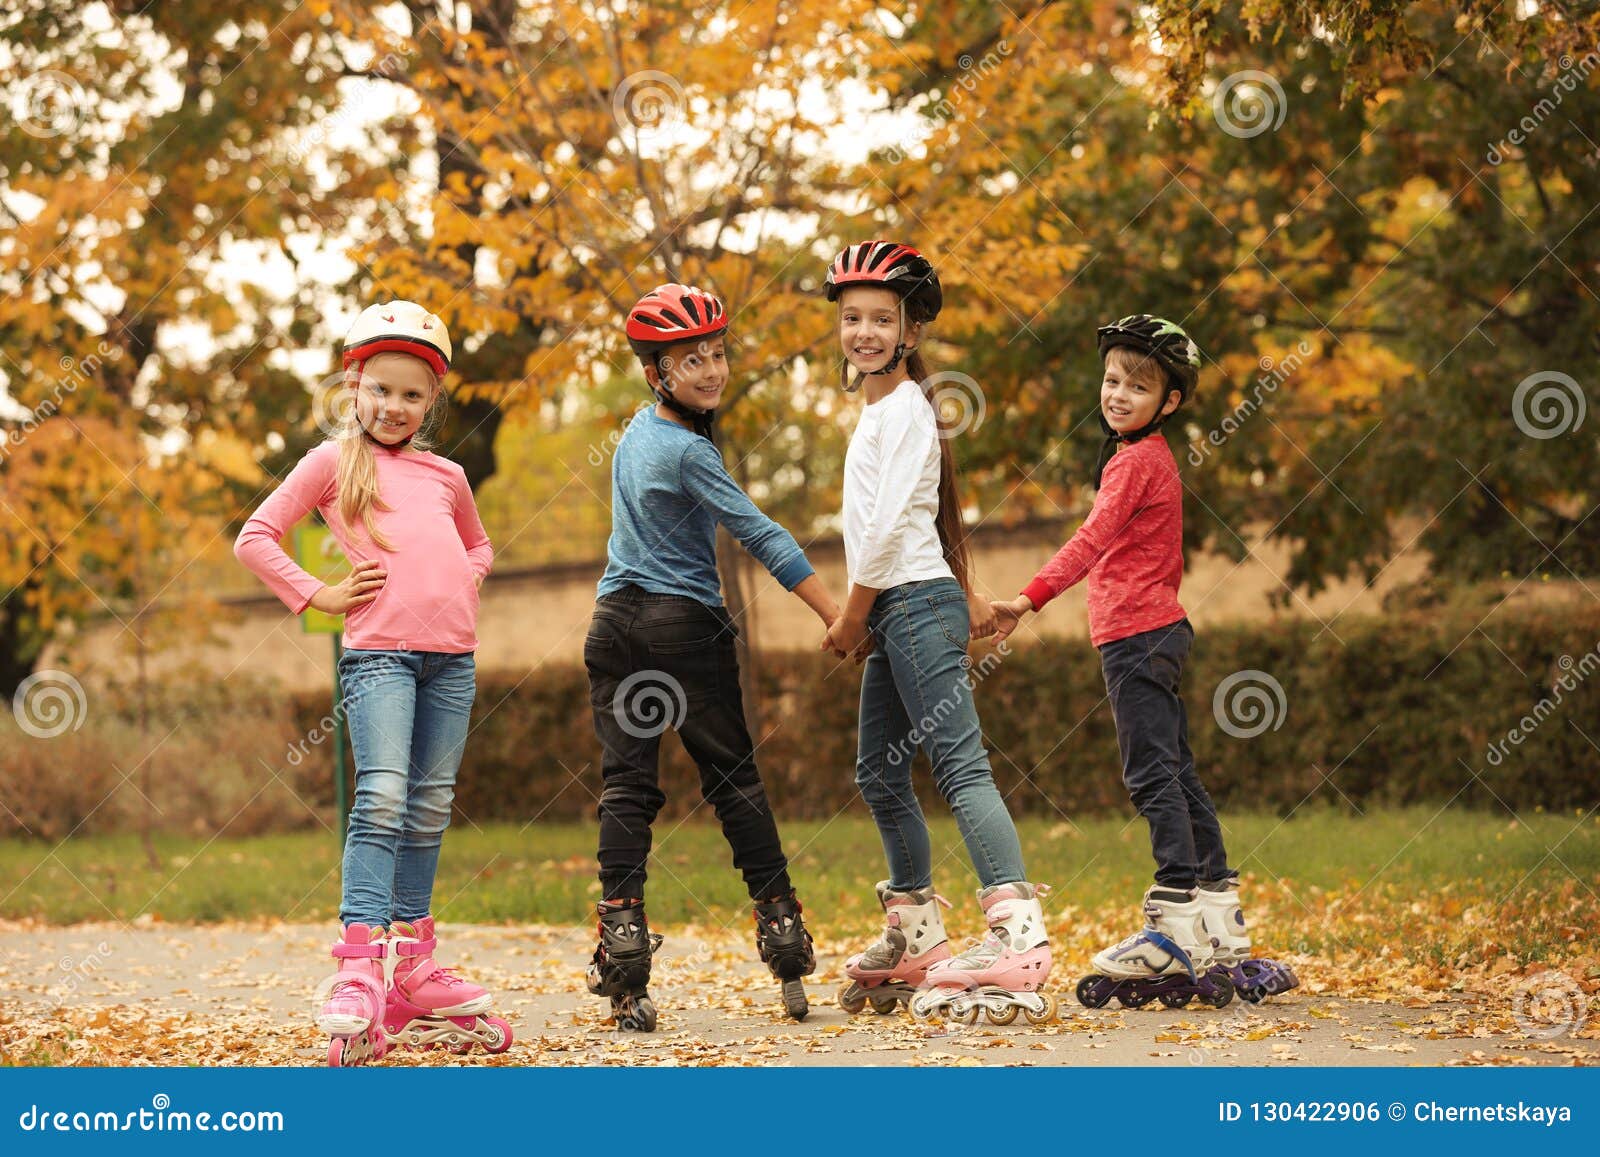 No Fear Kids Inline Skate Juniors Boys Children Roller Skates 